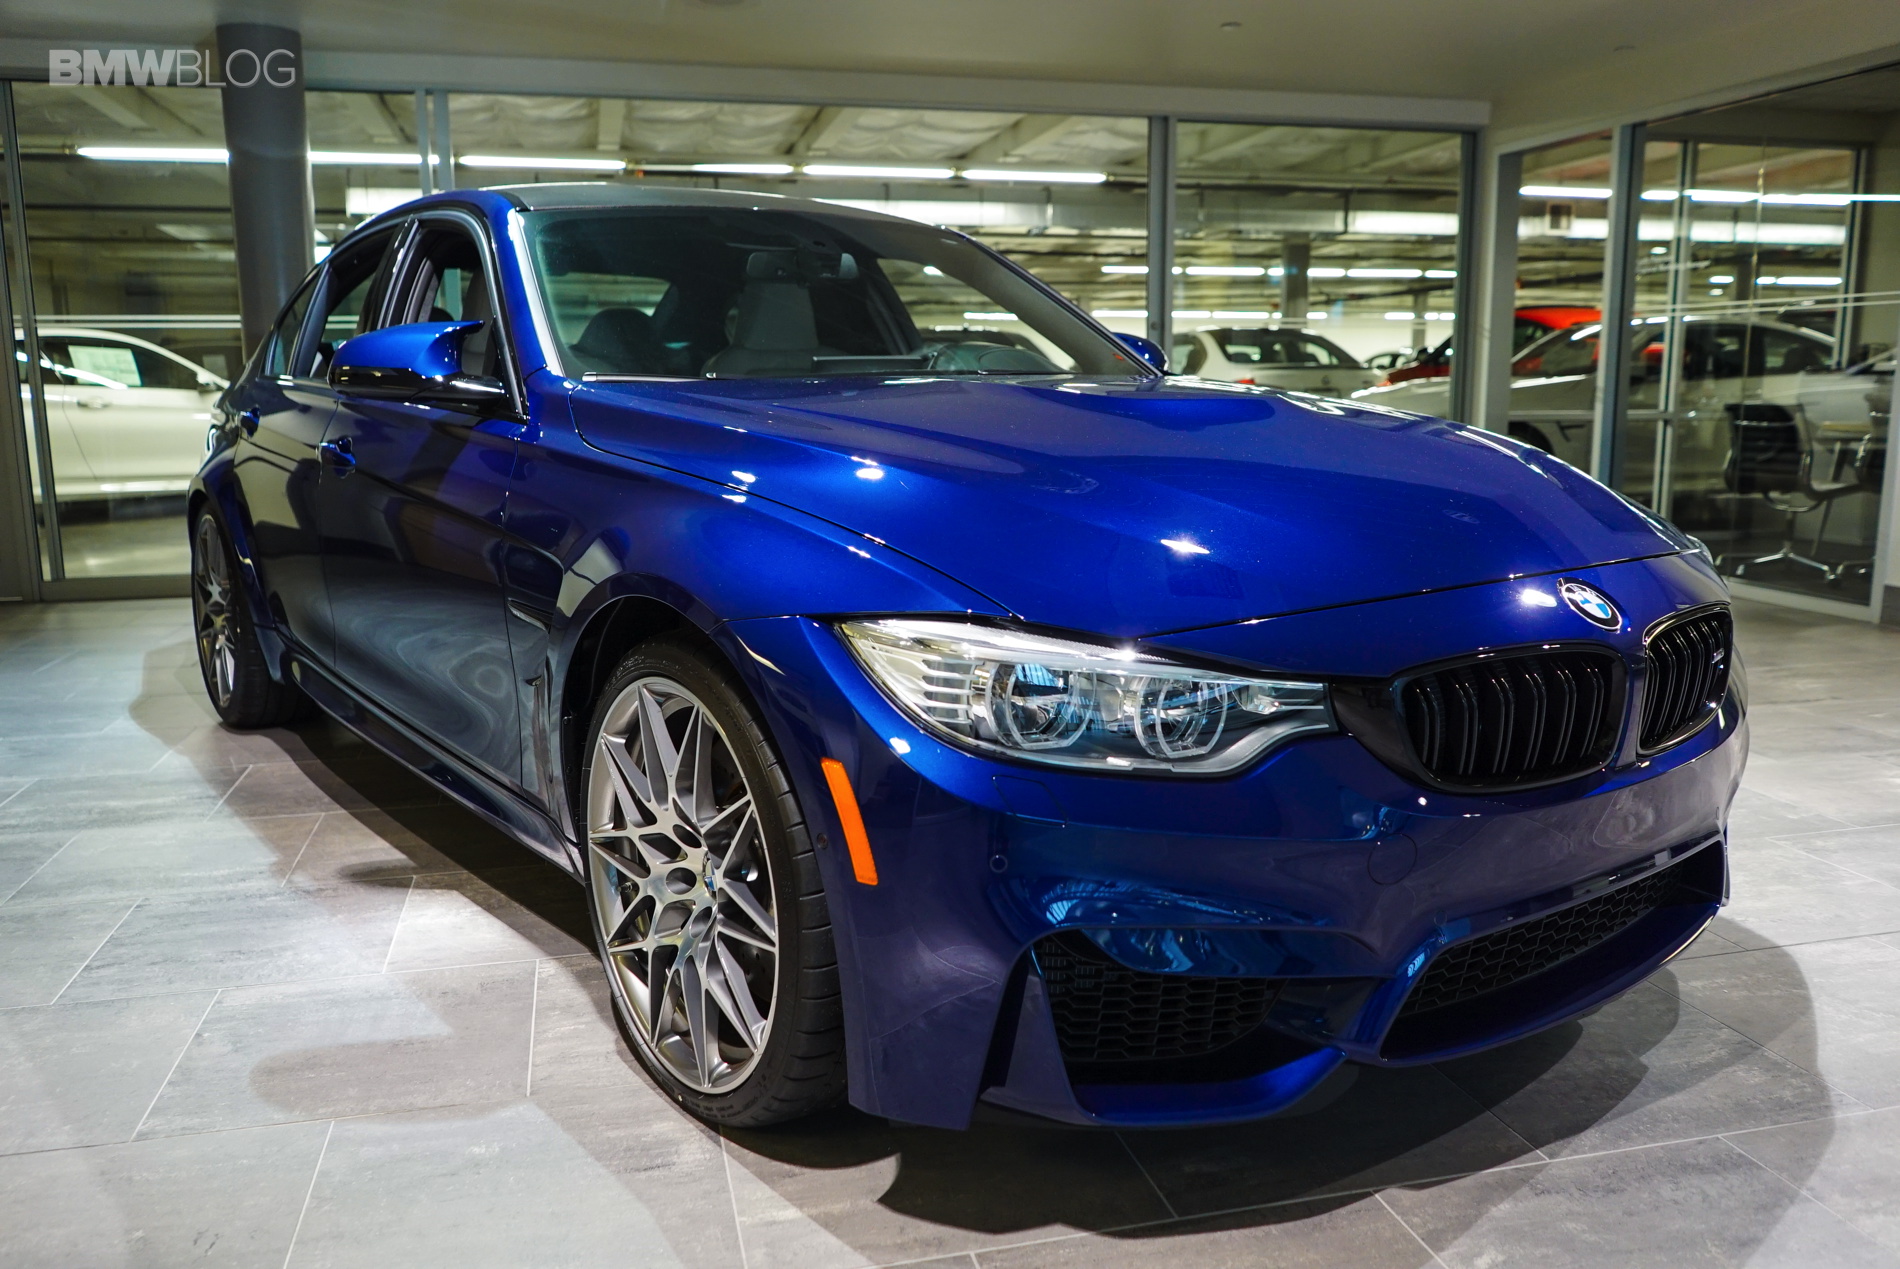 Синий металлик купить. Blue-Hera-Mica-Metallic-BMW-m3. BMW m5 ультрамарин. БМВ 530i синий танзанит. БМВ 530i синяя.